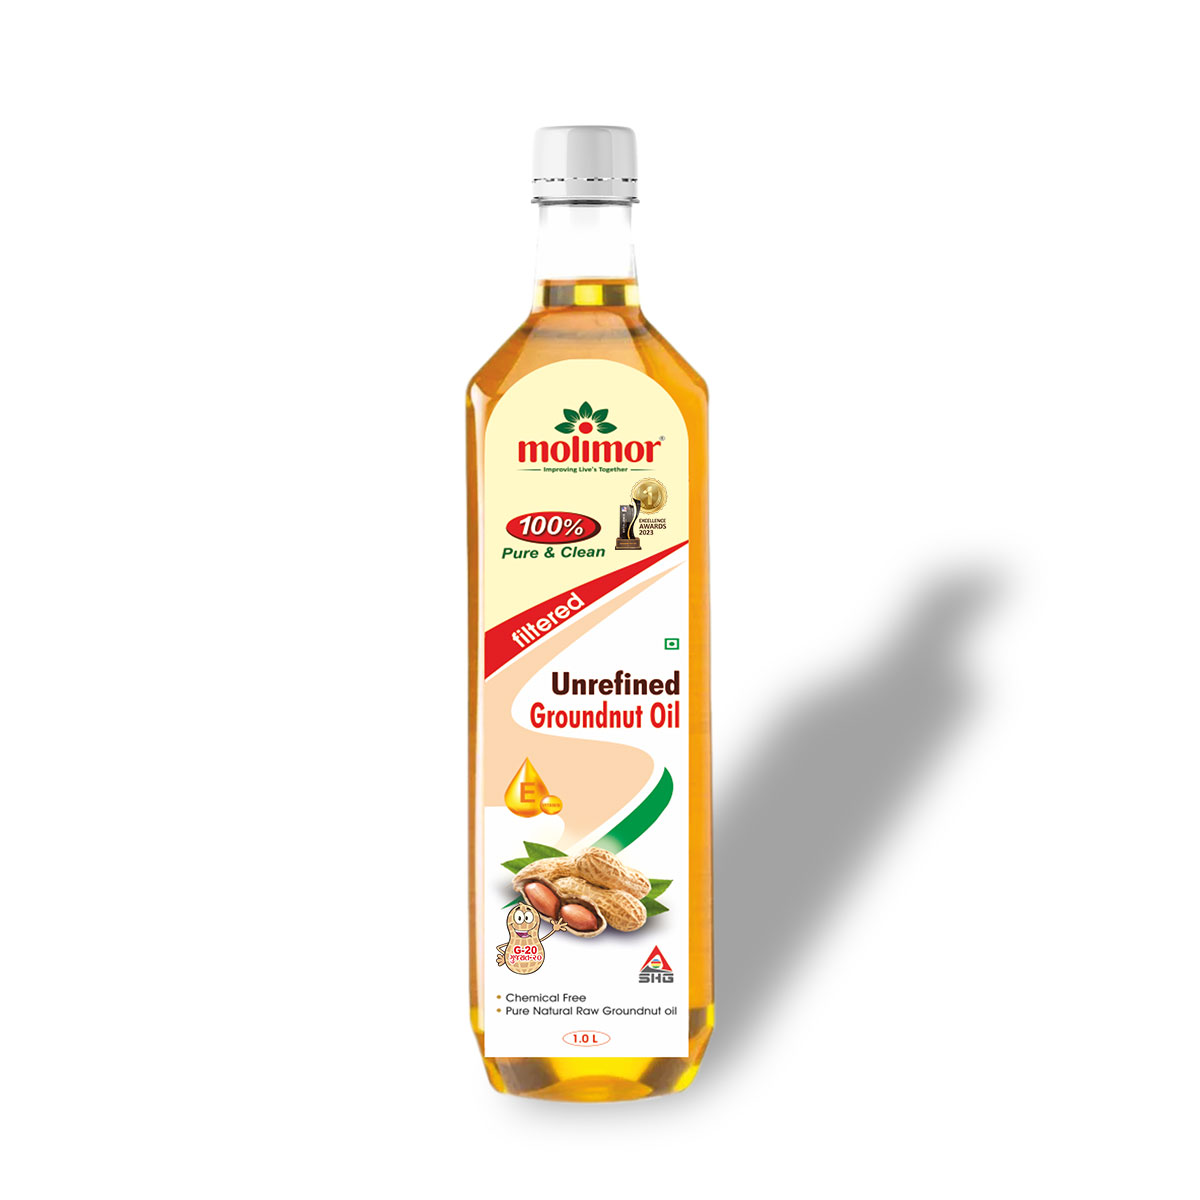 Unrefined groundnut oil